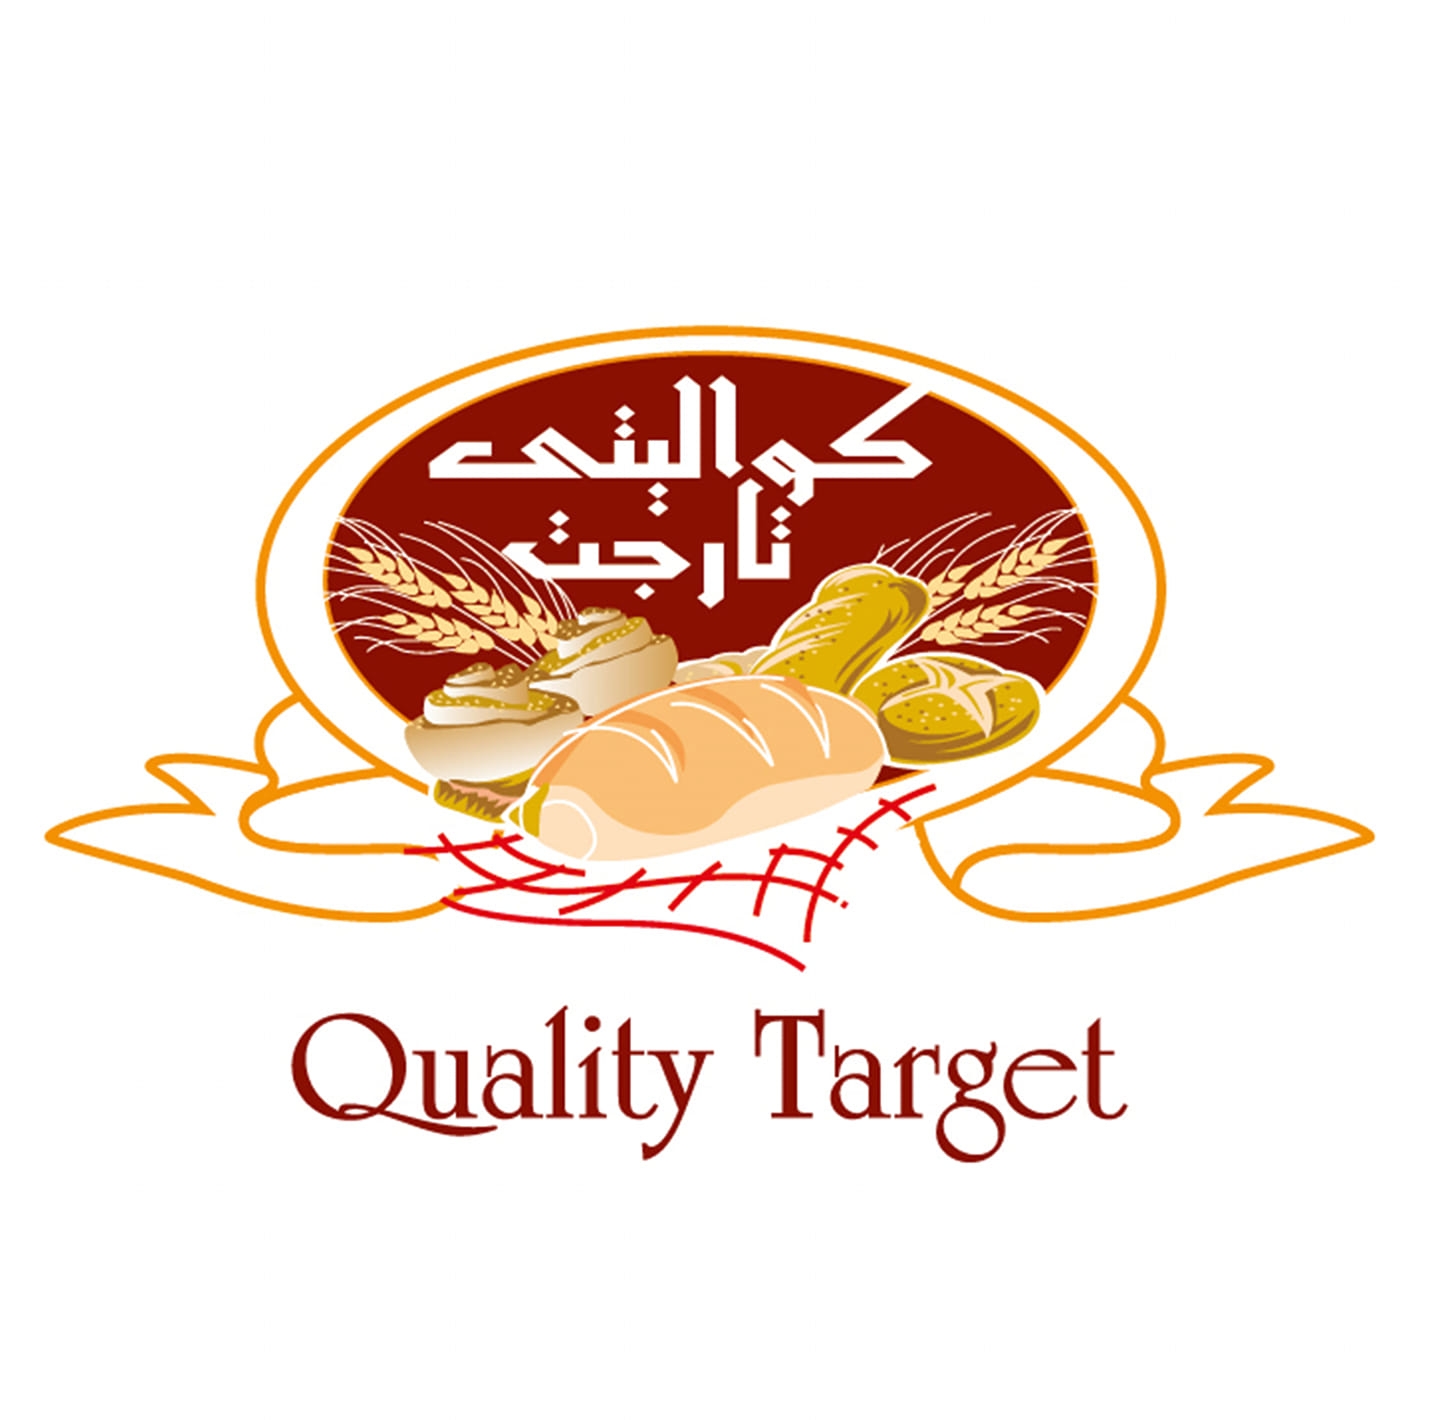 Quality Target